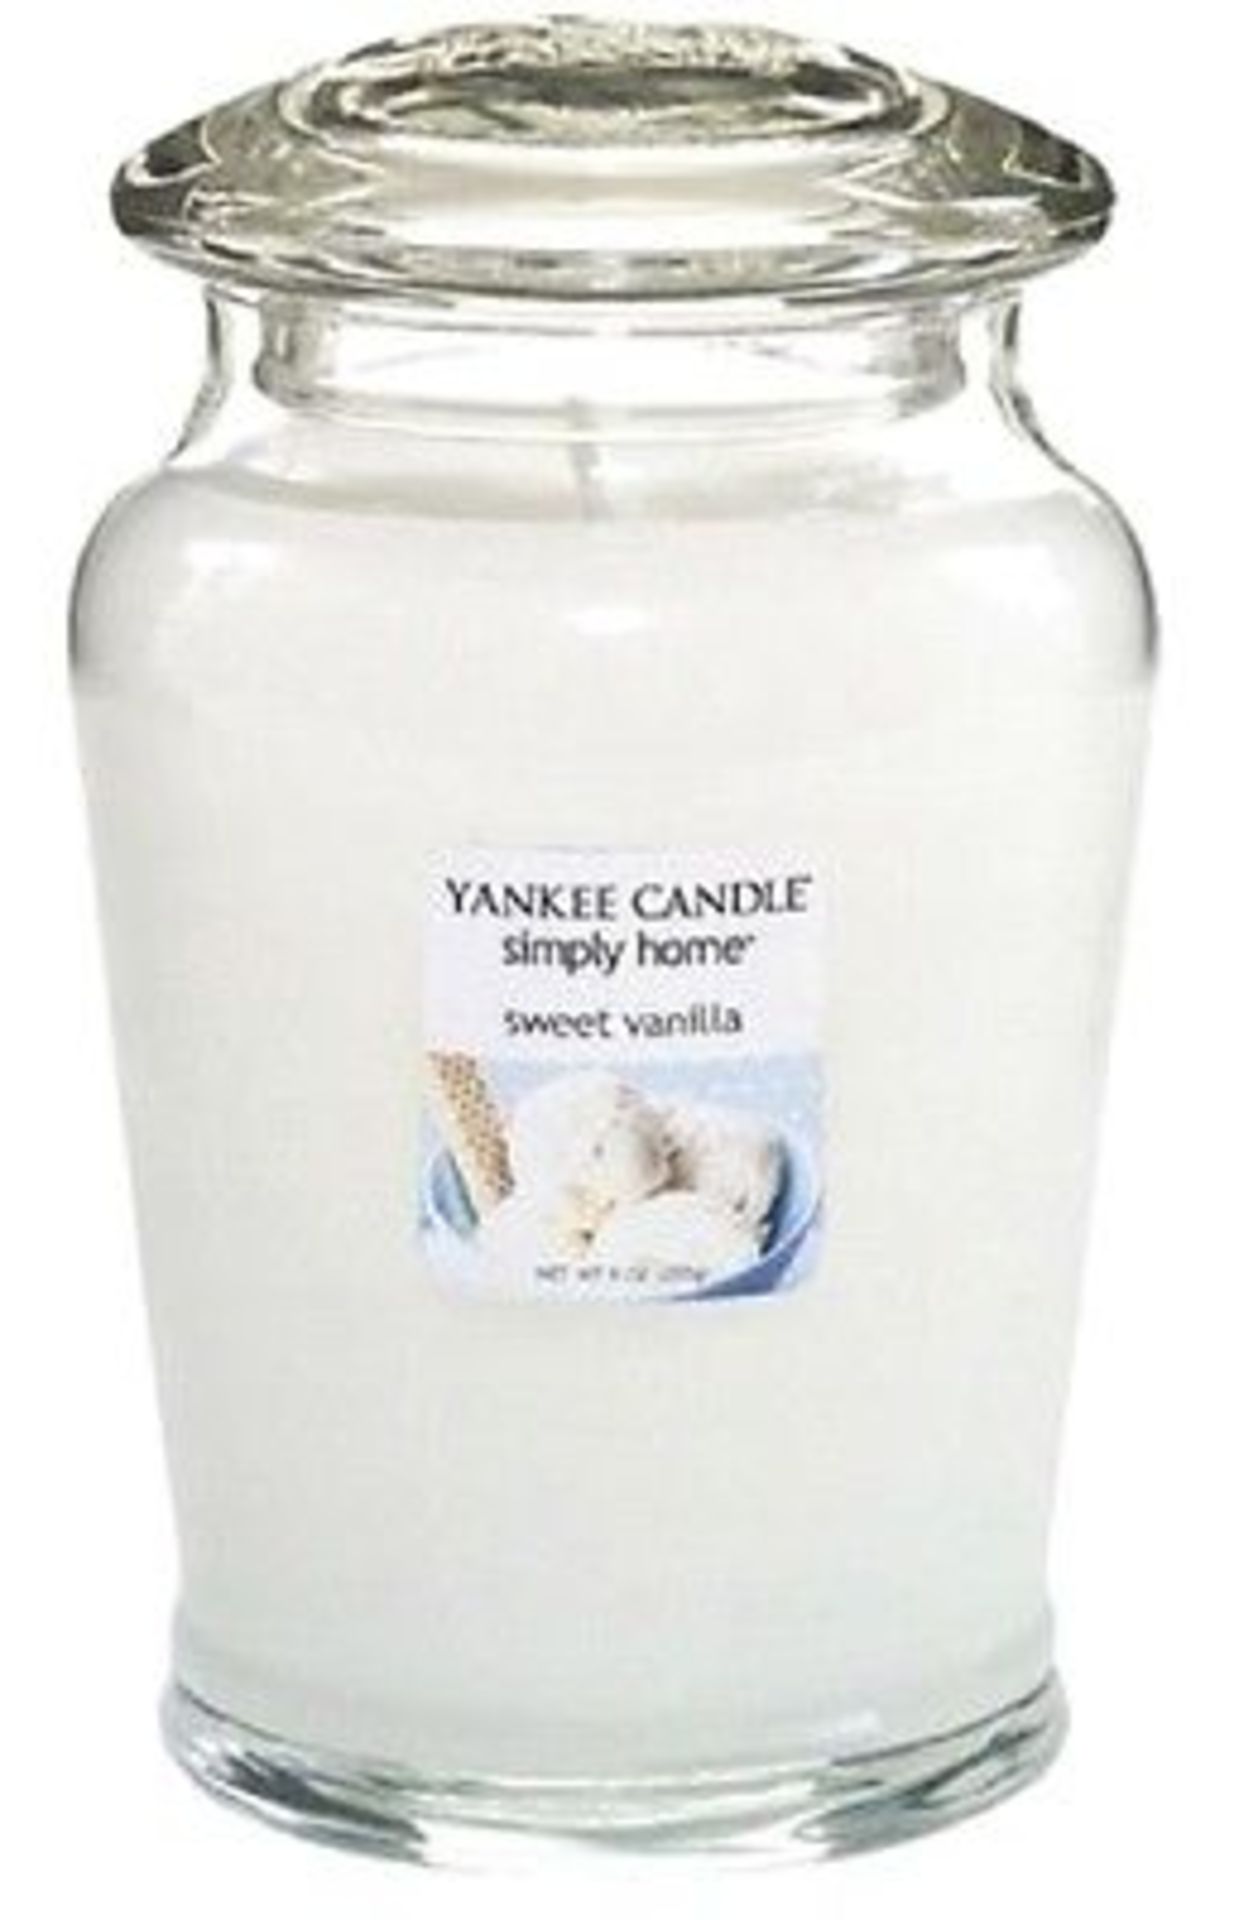 V Brand New Yankee Candle Jar Medium Sweet Vanilla 12oz Internet Price £10.99